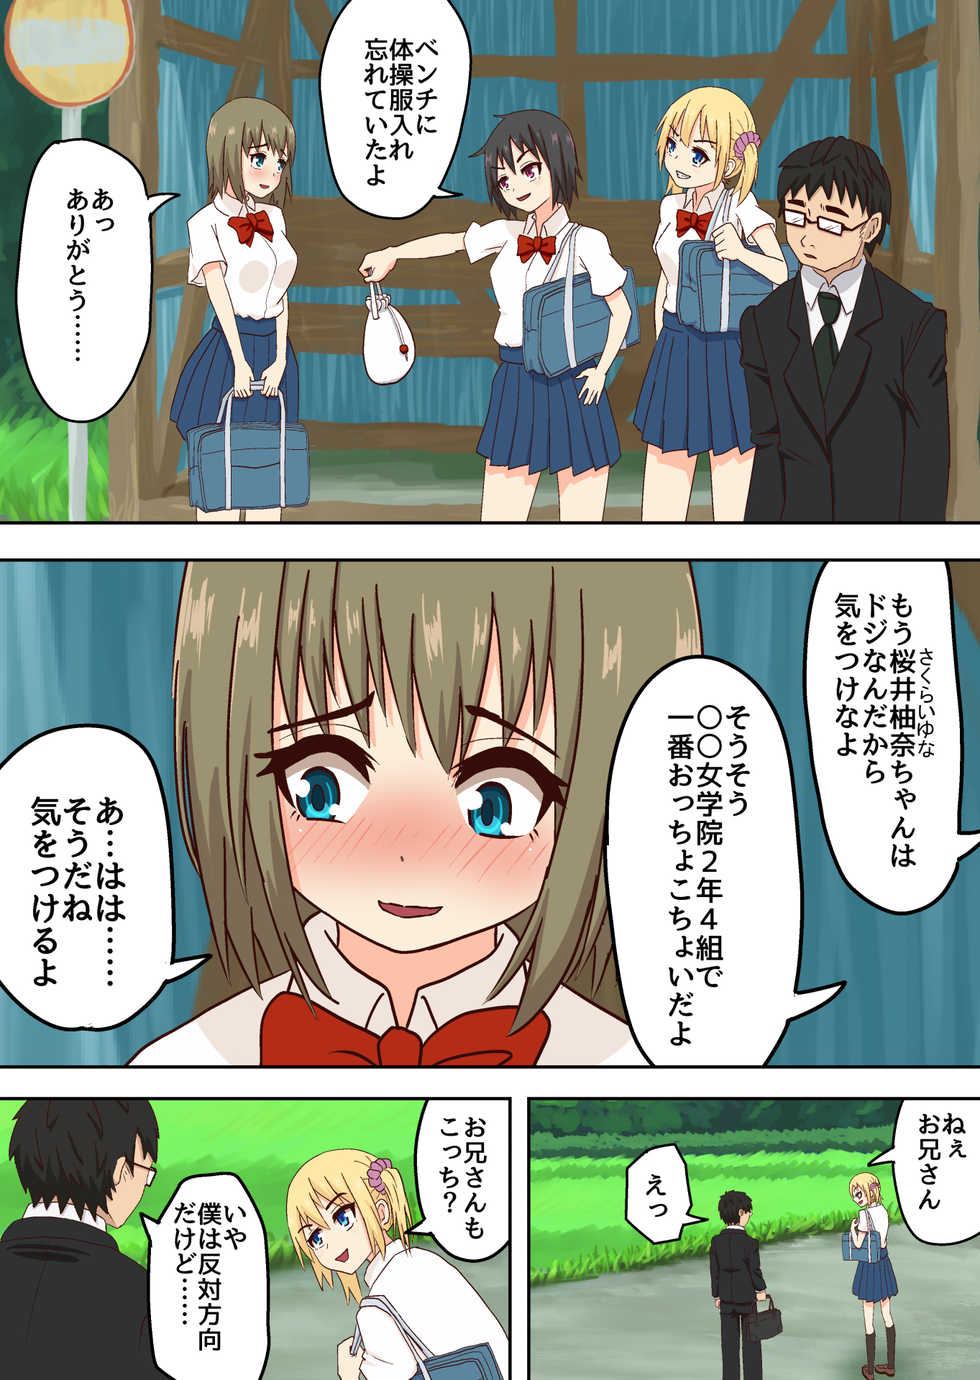 [Takahashi] Bus Stop Bullying. - Page 20